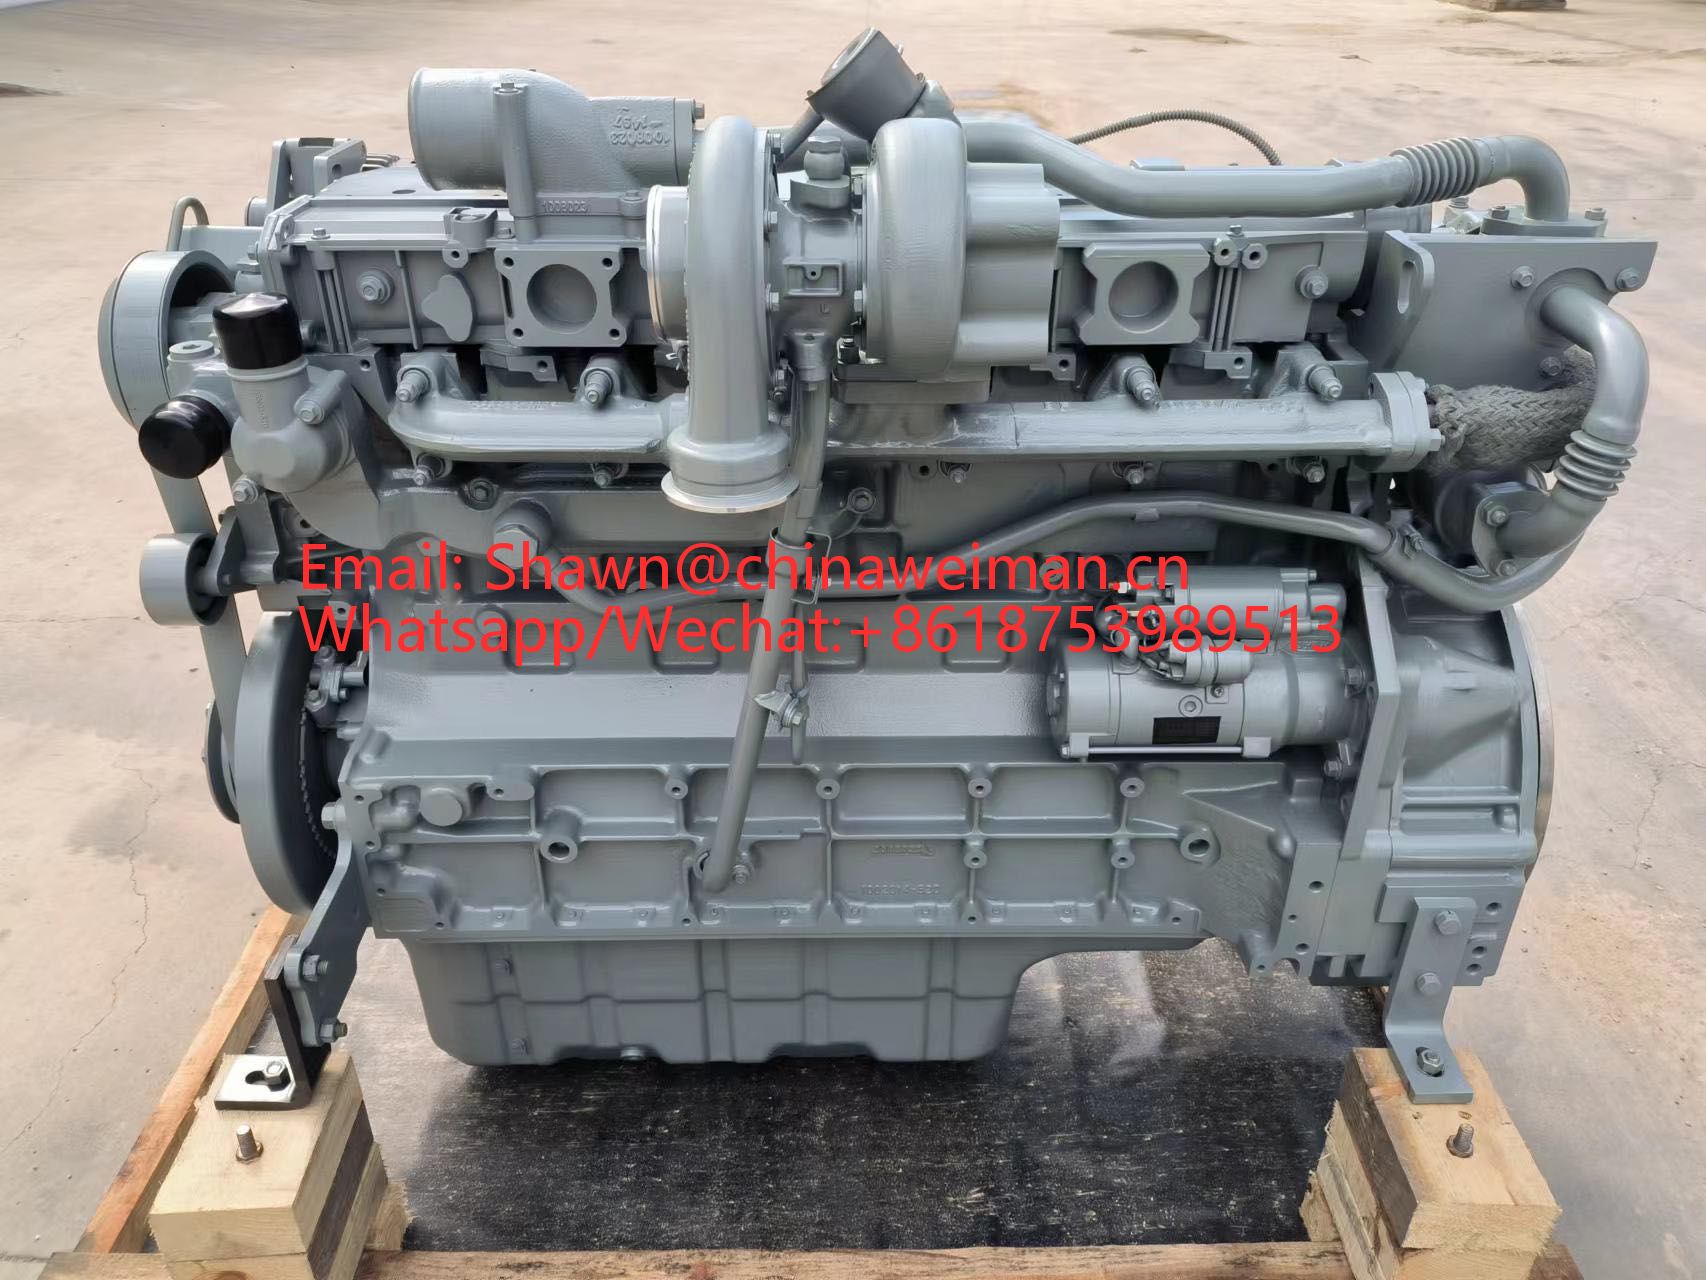 Dachai engine ASSY BF6M1013-22T3R1837 4110001841 for SDLG LG958L